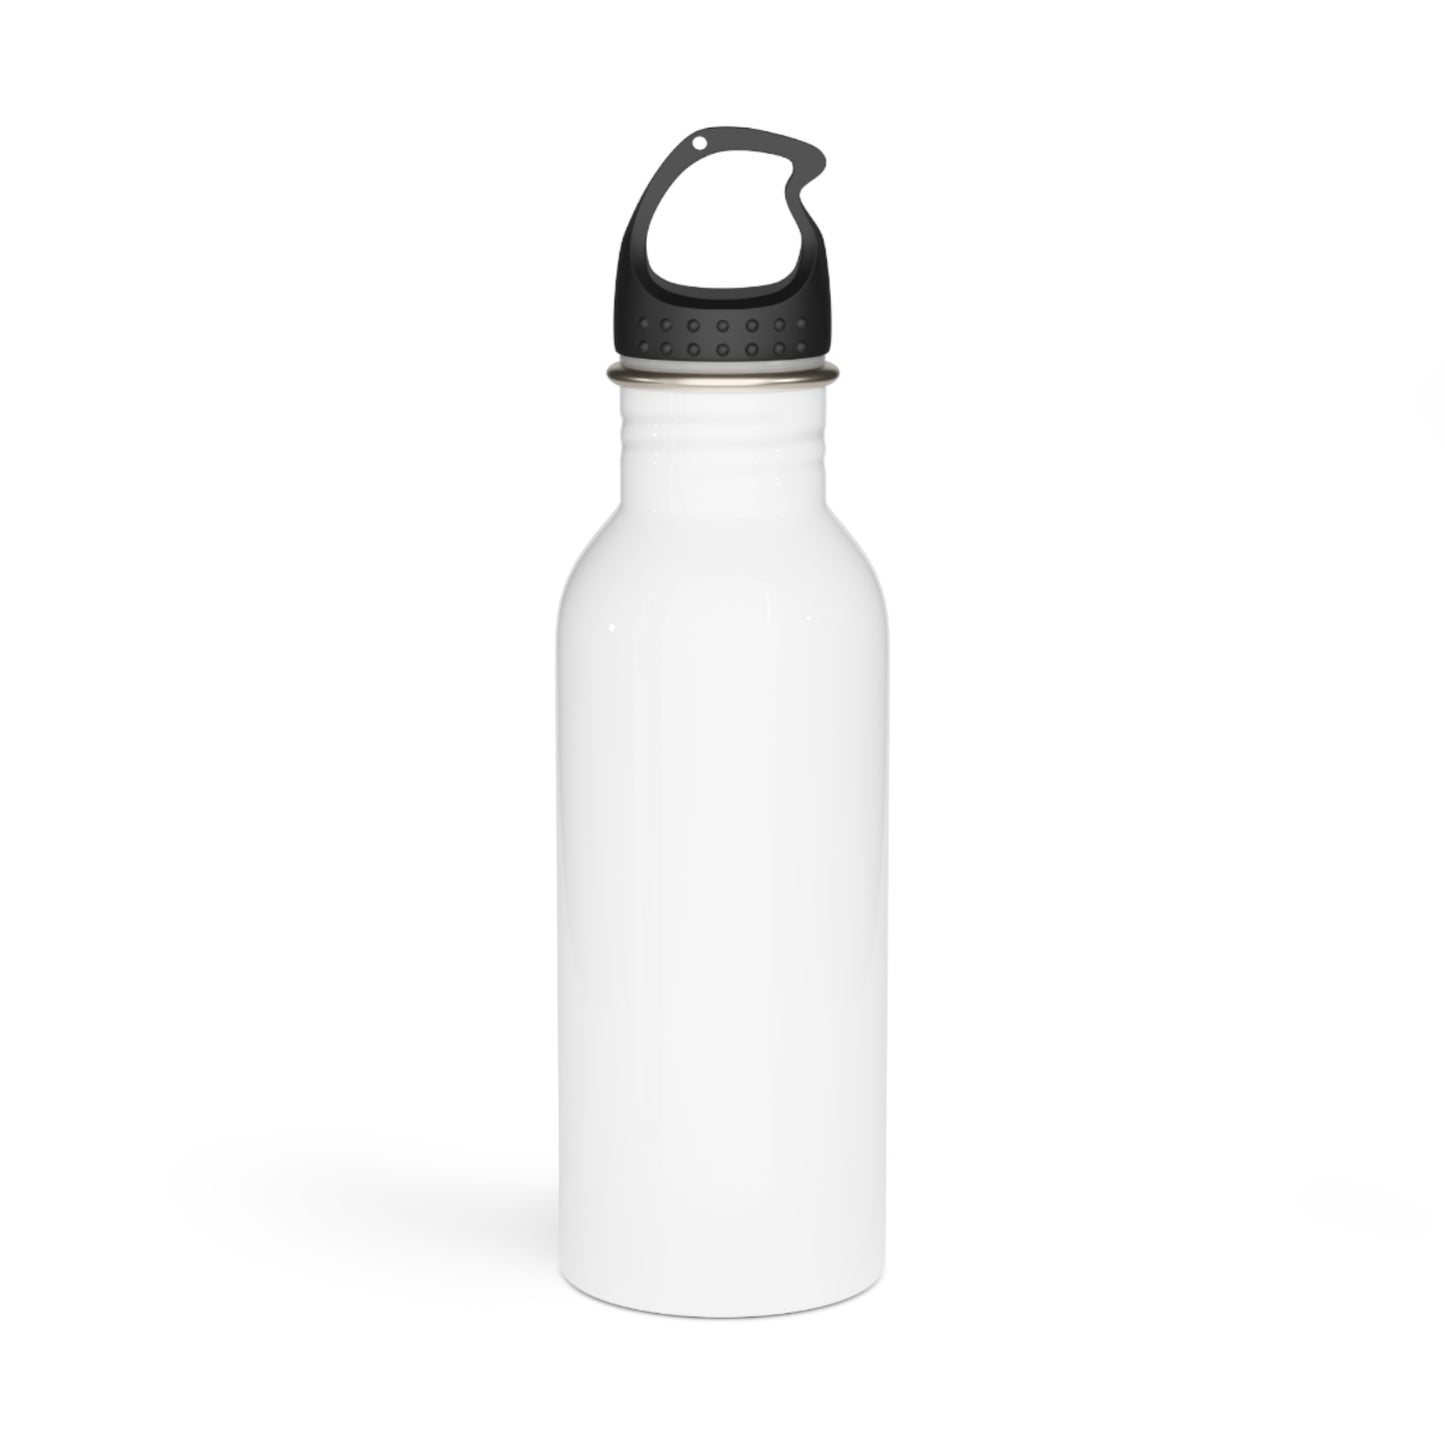 HSE Stainless Steel Water Bottle